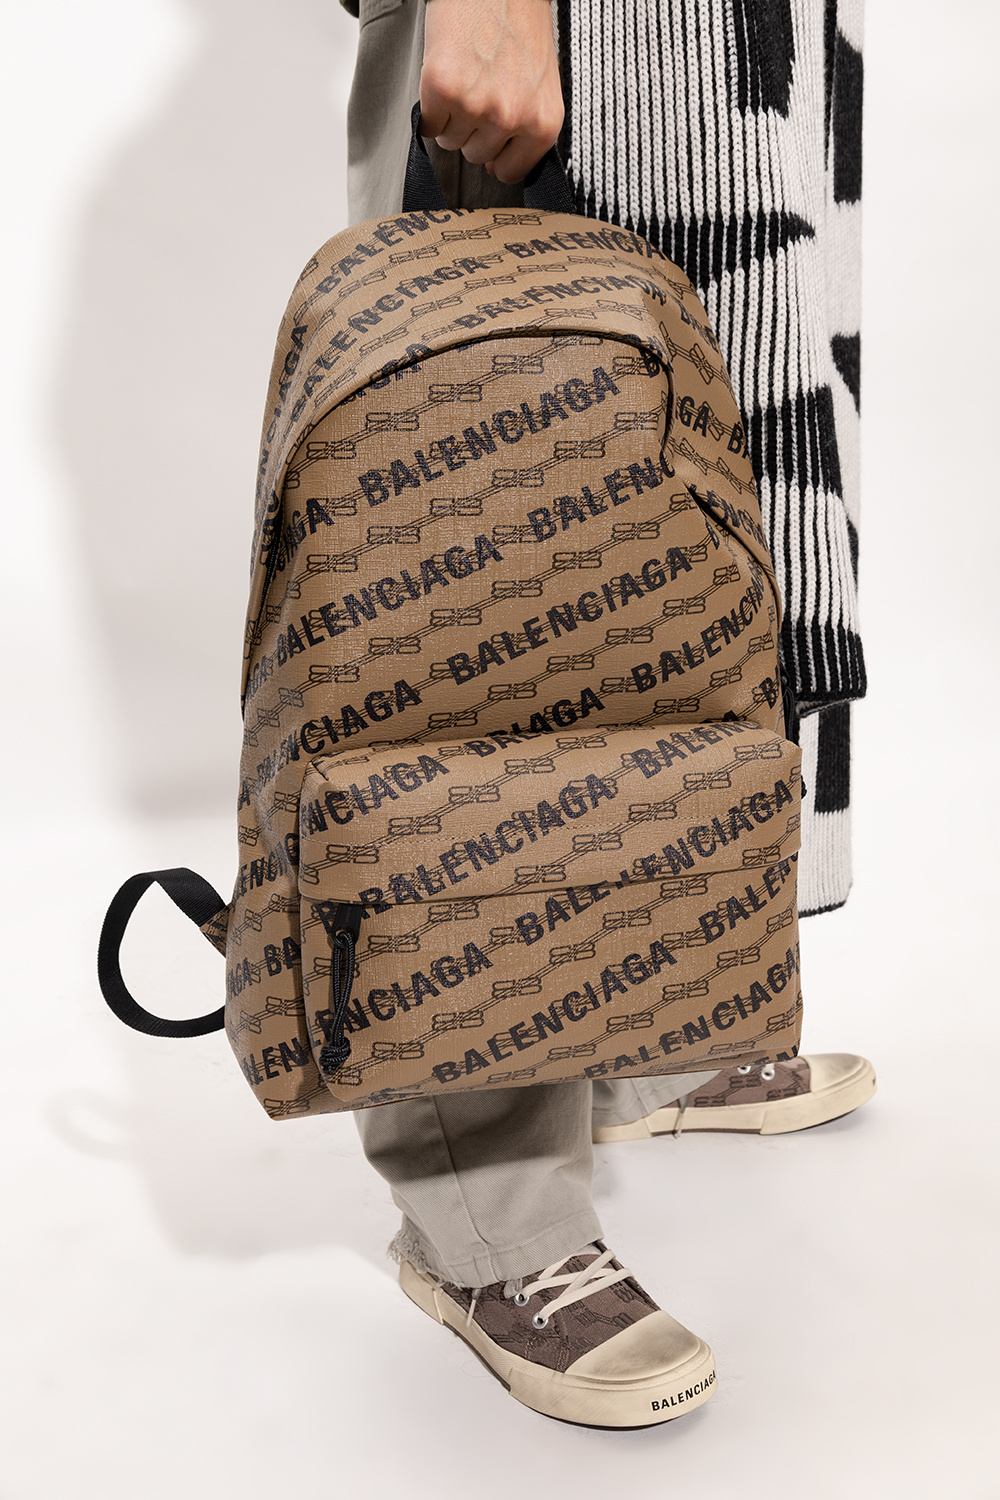 StclaircomoShops, Women's spade Bags, Michael Michael Kors 'Jet Set Charm  Small' handbag